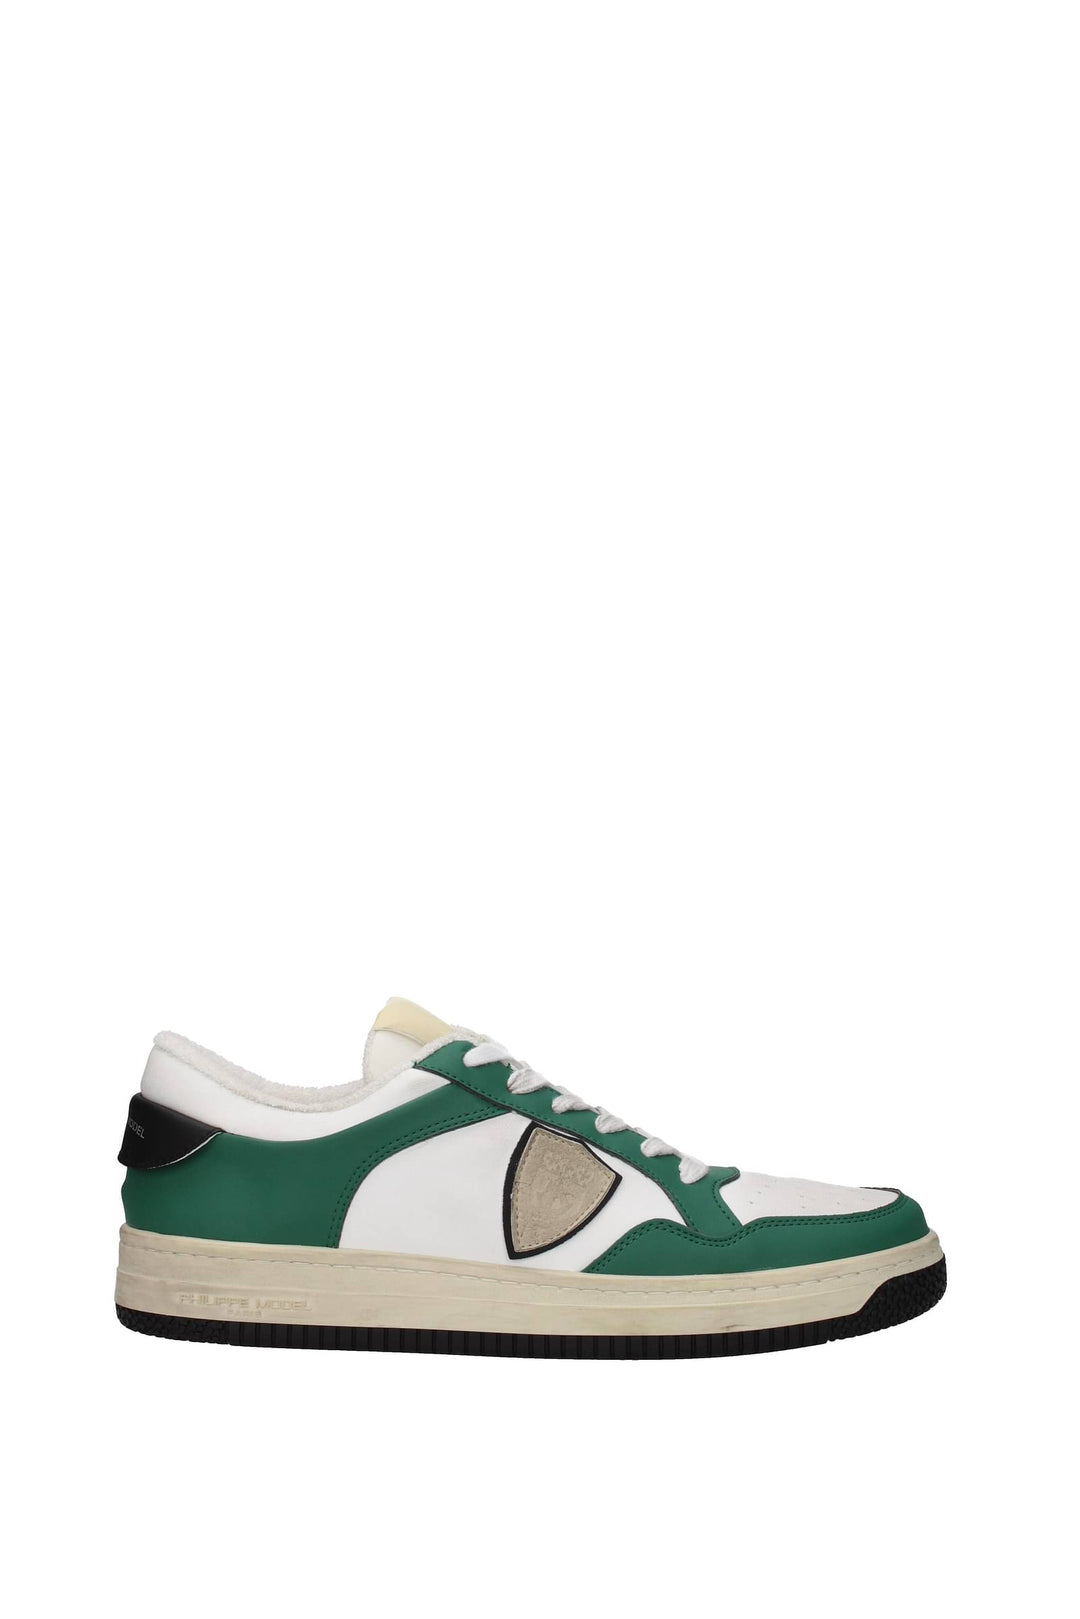 Sneakers Lyon Low Eco Pelle Bianco Verde - Philippe Model - Uomo